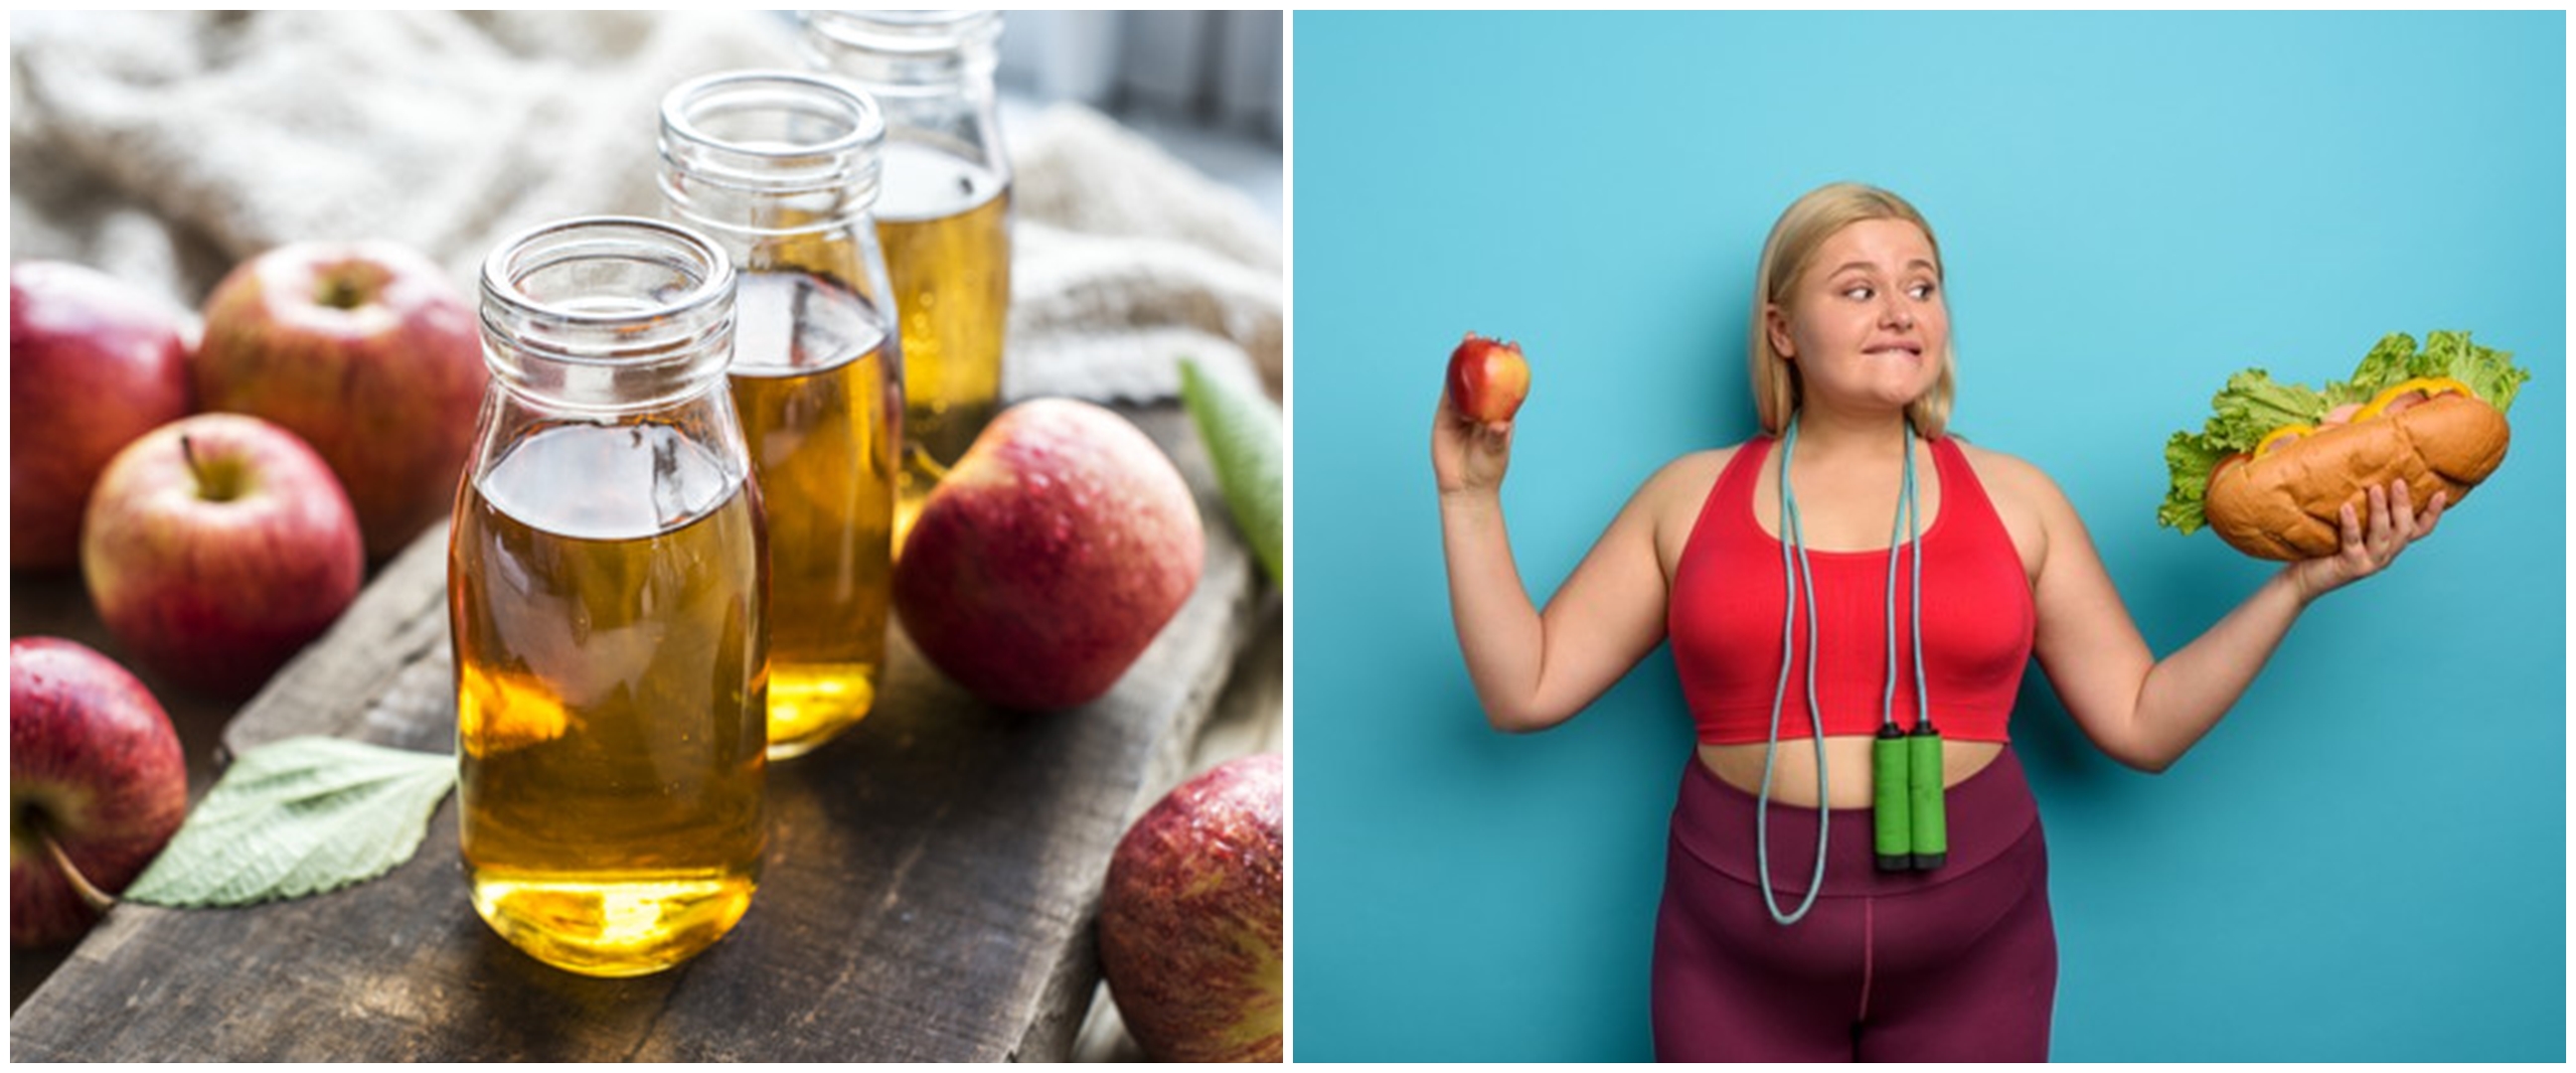 33 Manfaat cuka apel untuk wajah, rambut, dan tubuh, aman digunakan